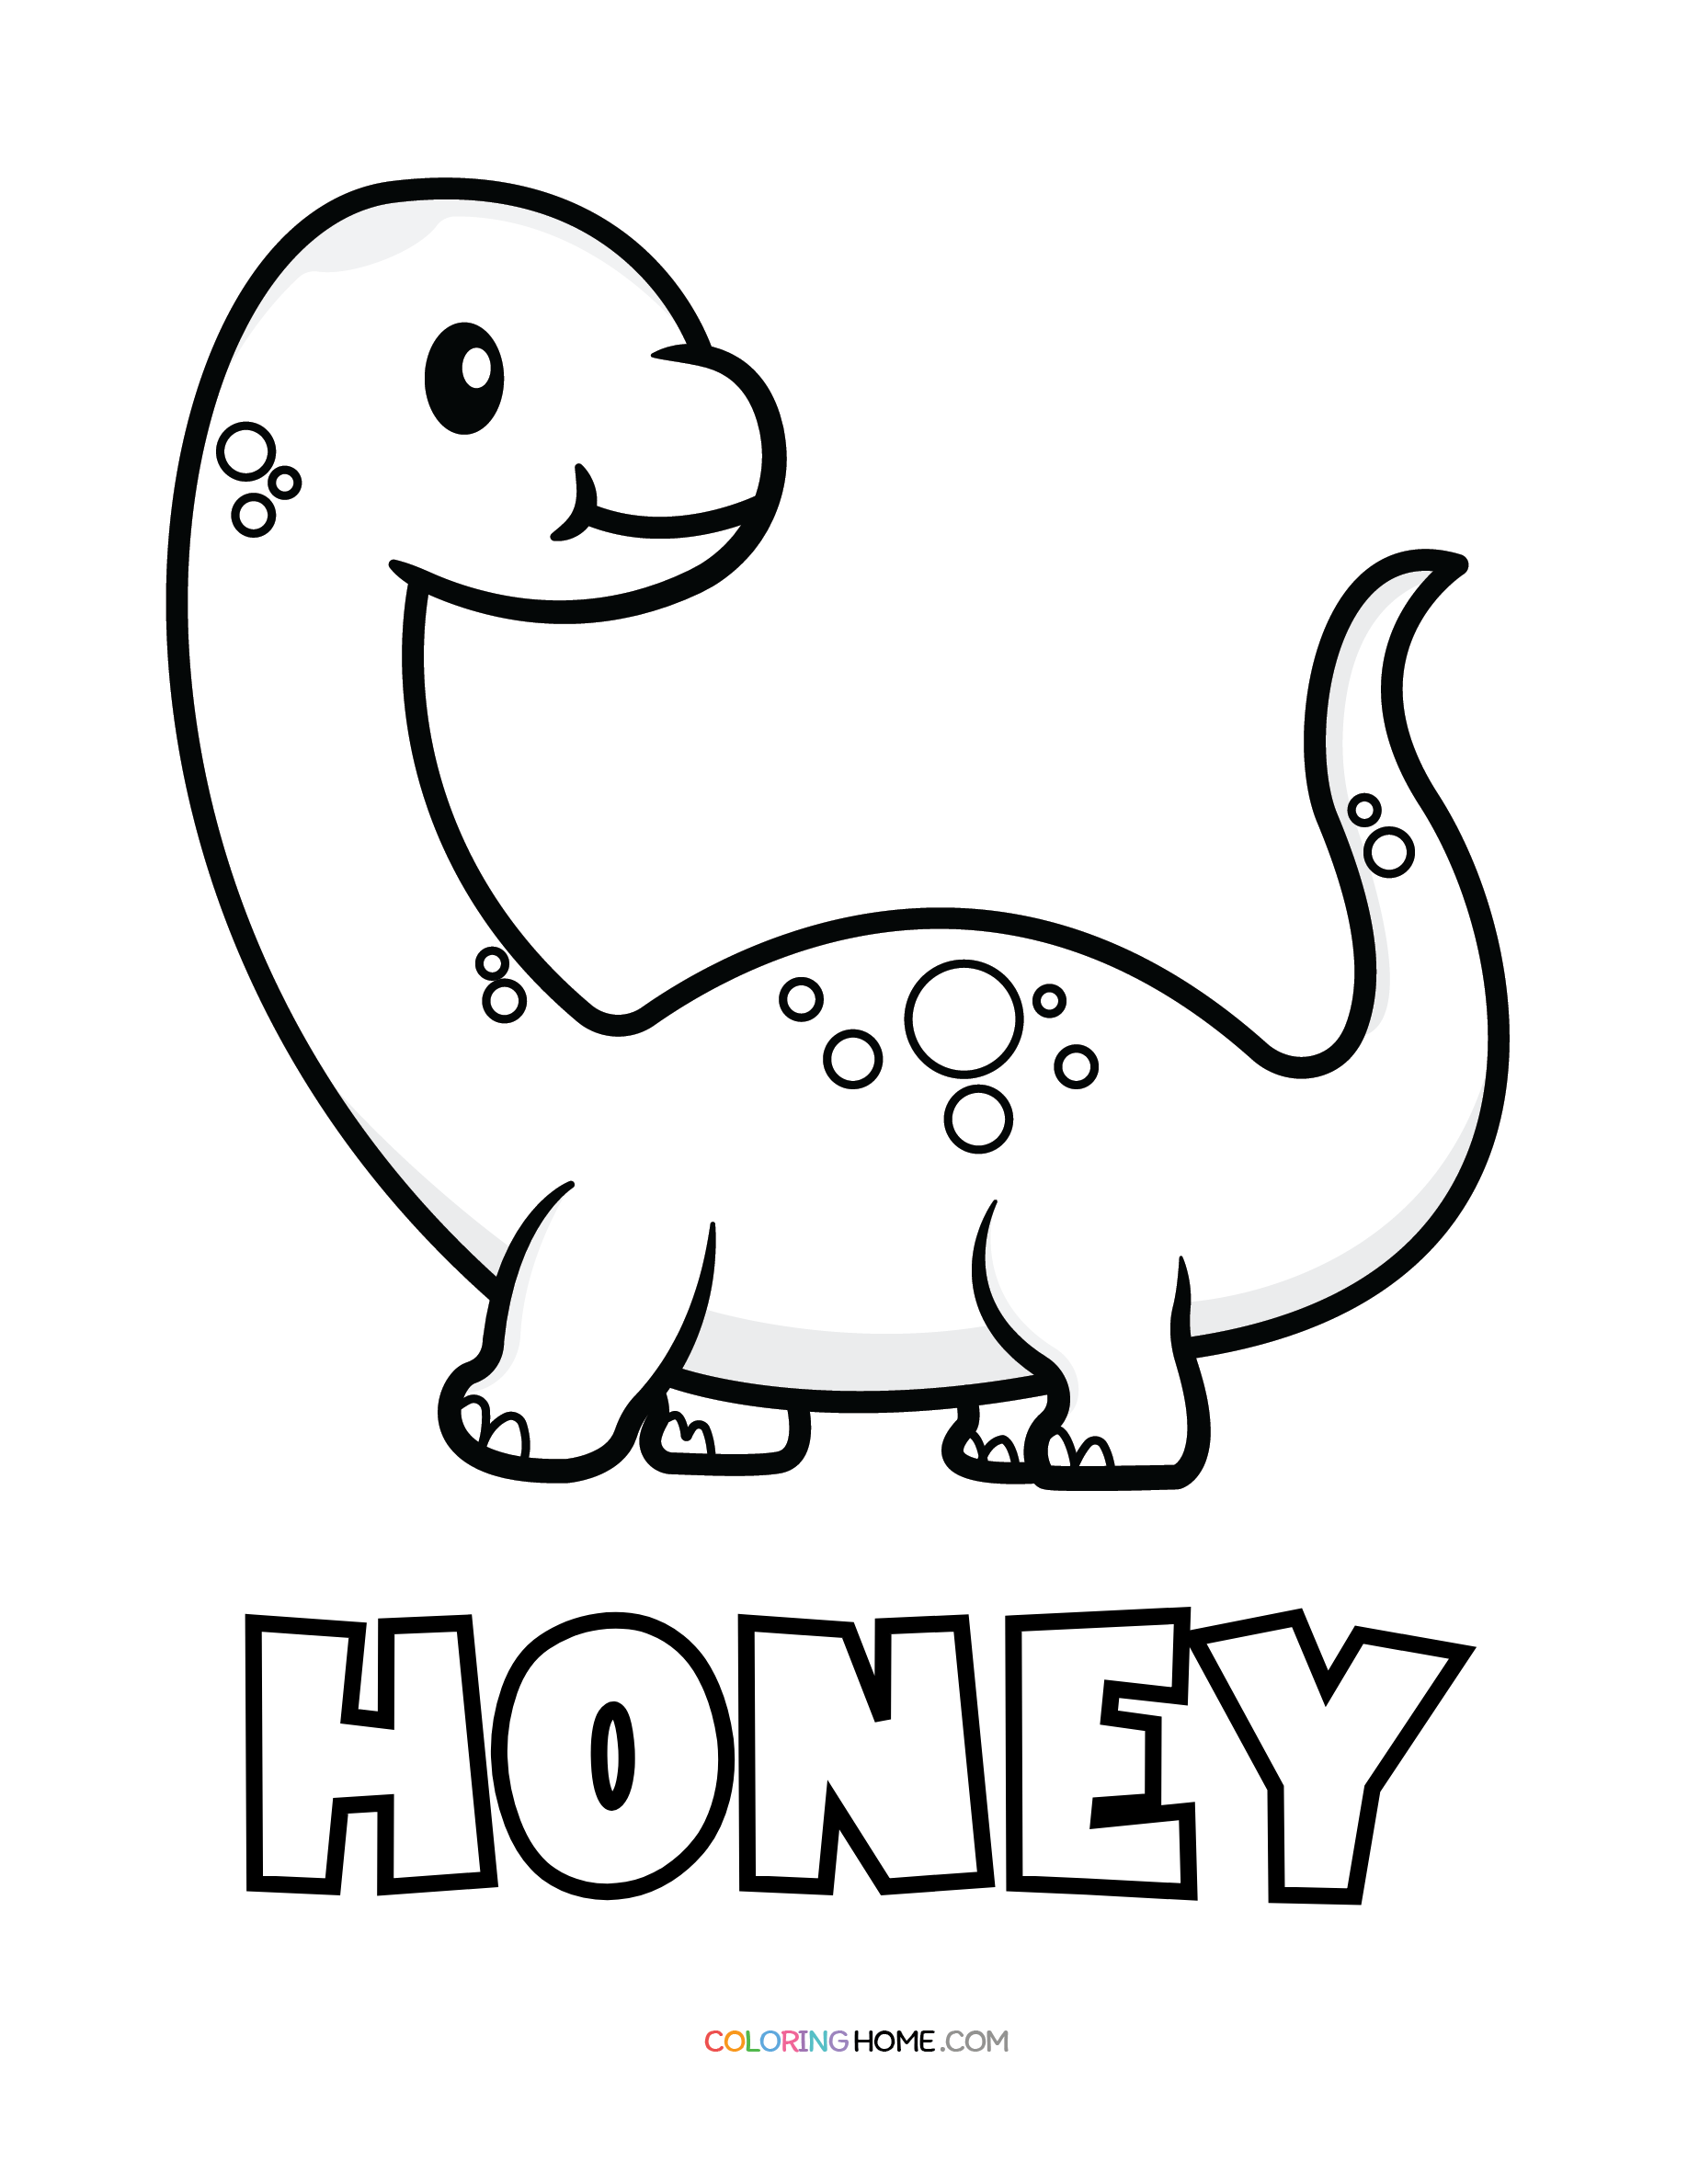 Honey dinosaur coloring page